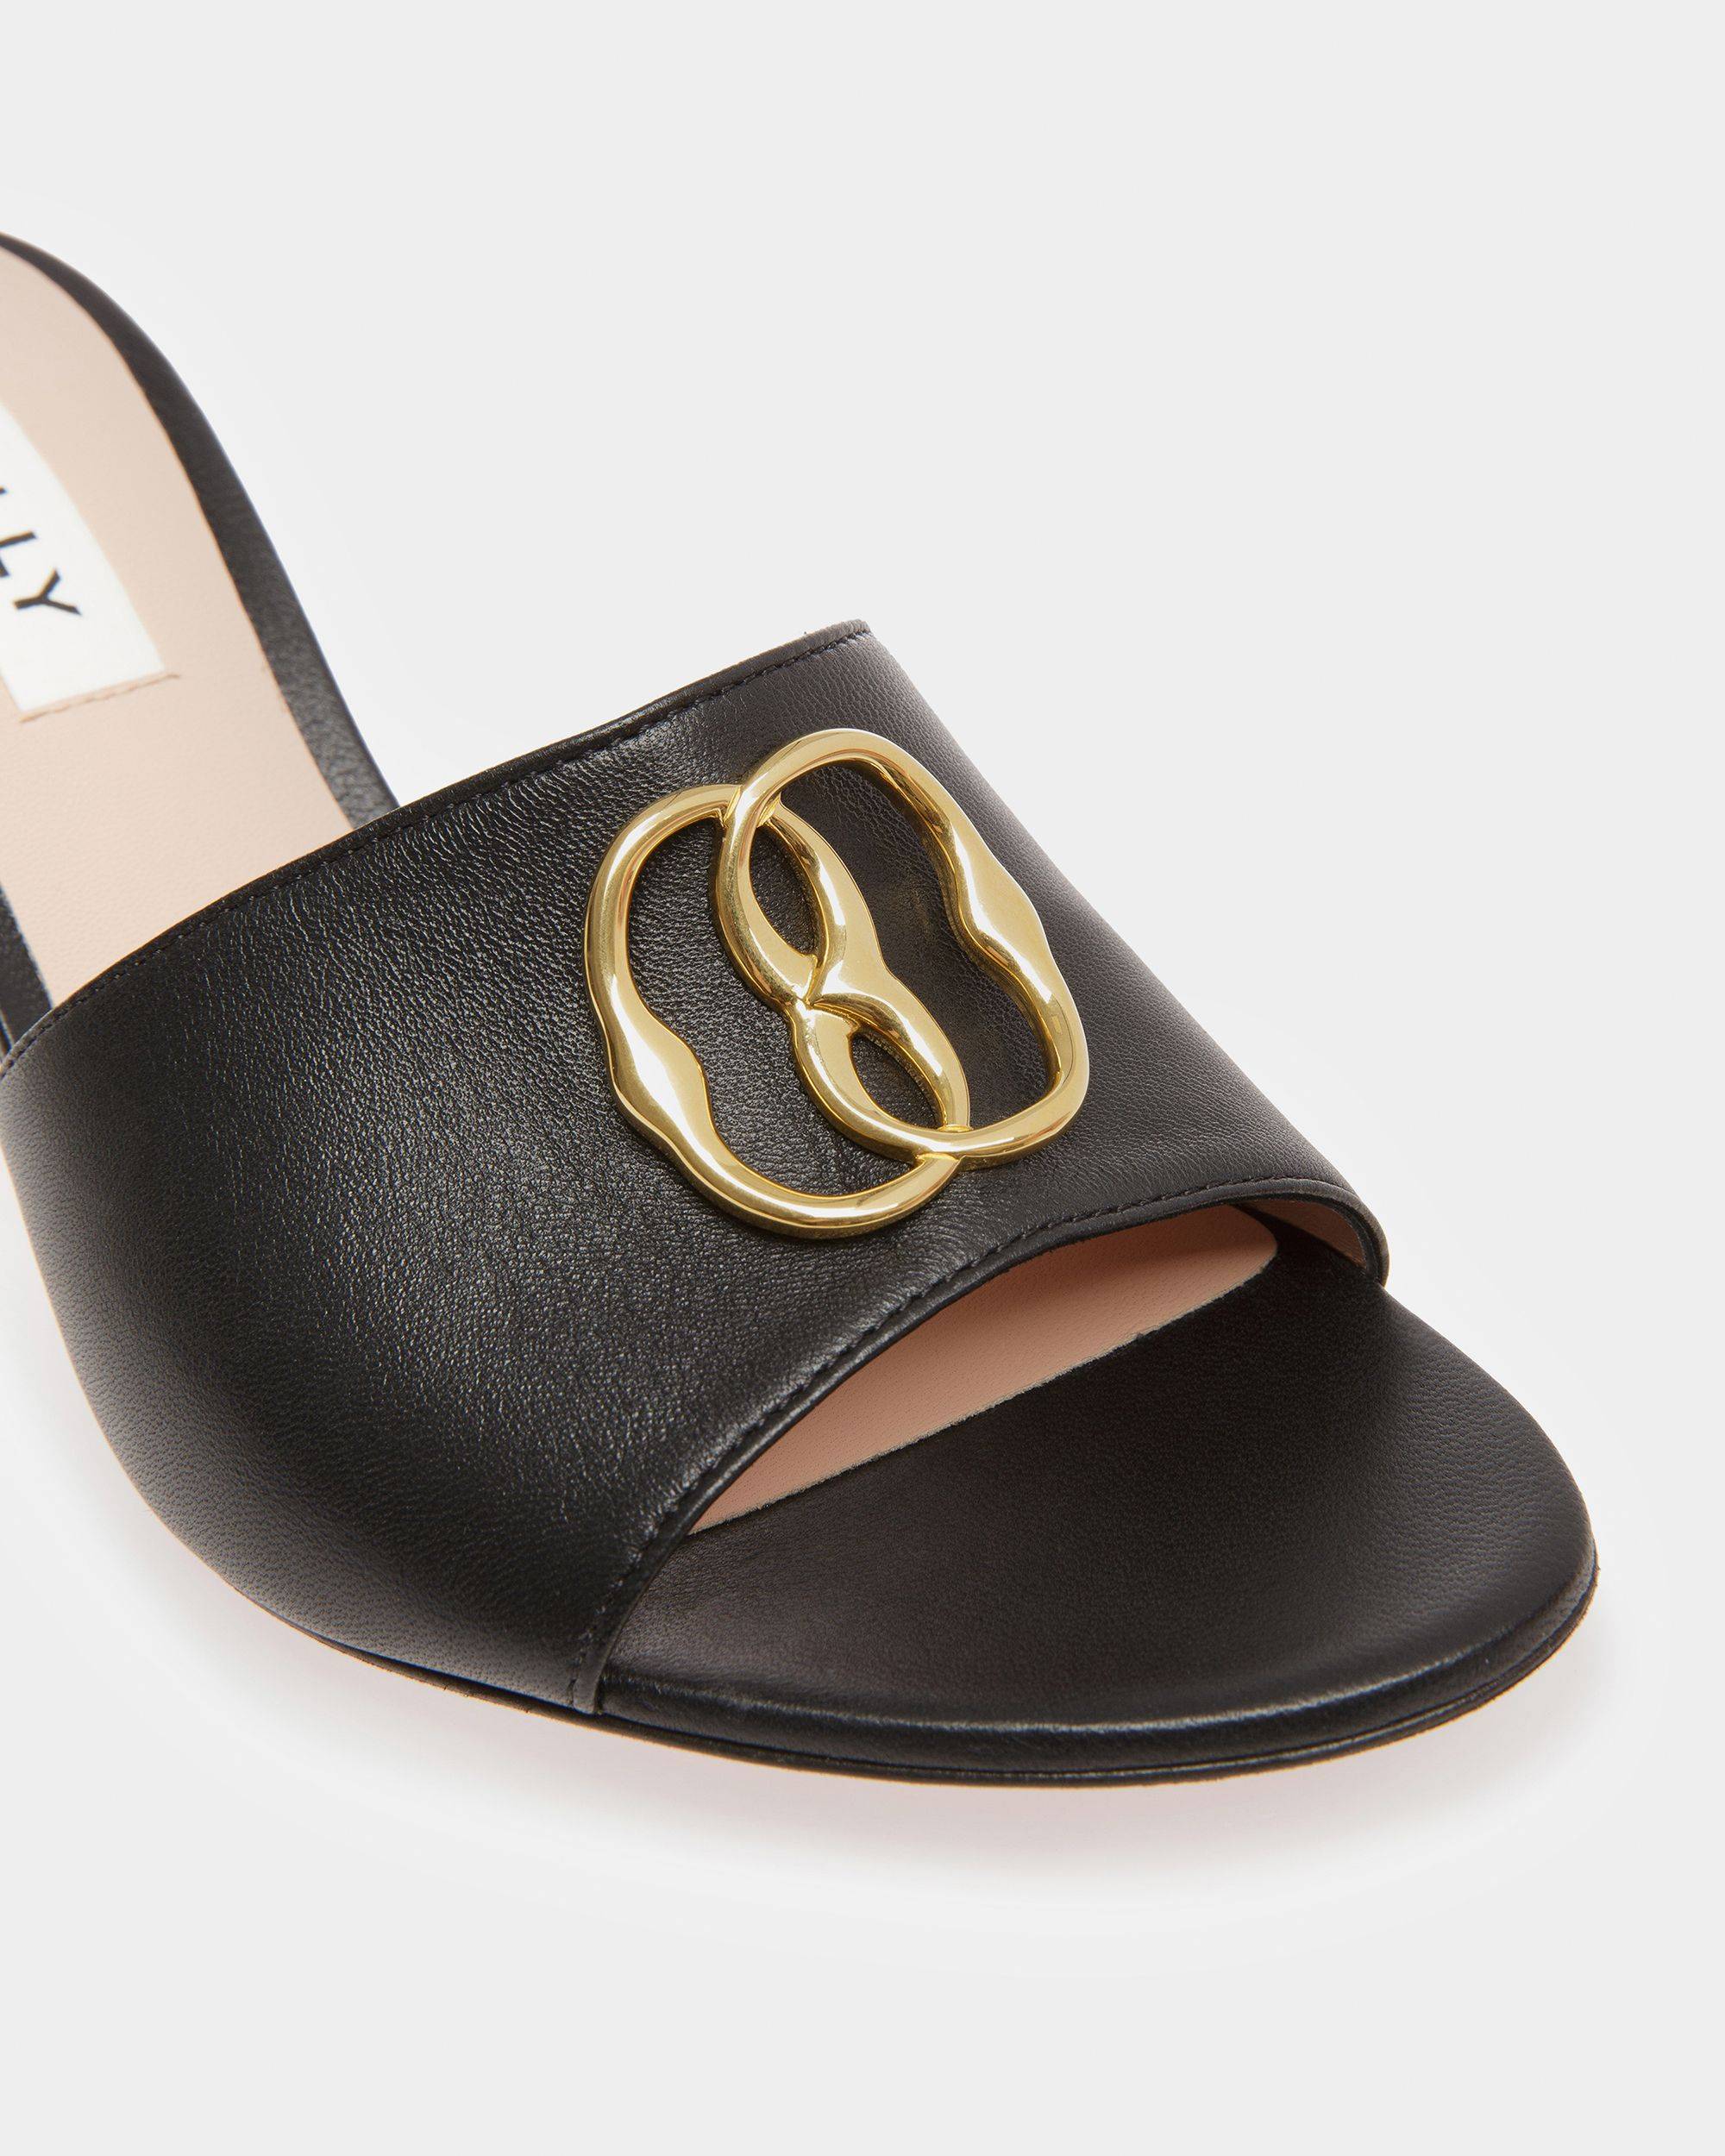 Geha | Women's Emblem Sandals | Black Leather | Bally | Still Life Detail